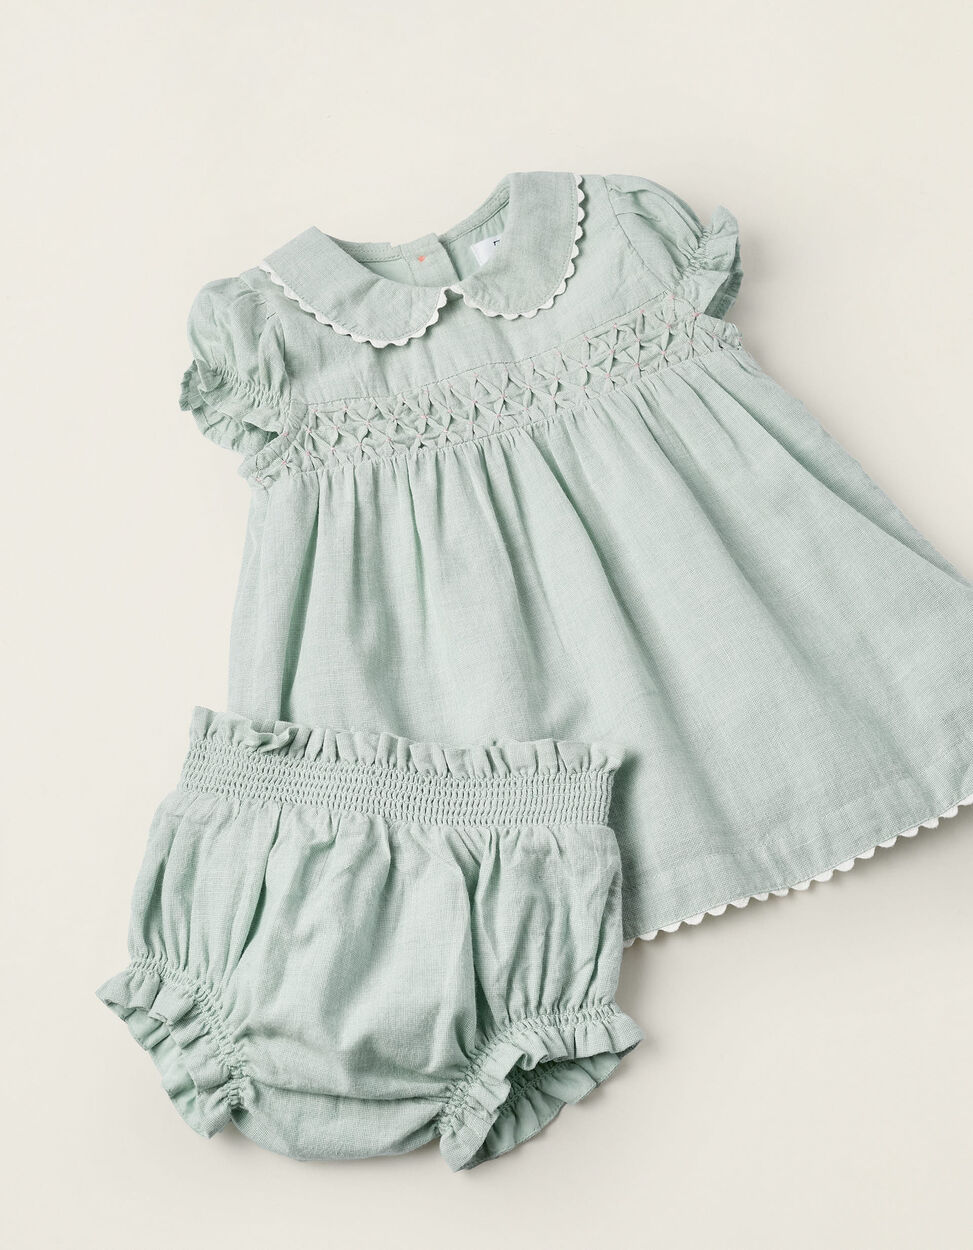 Buy Online Dress + Cotton Bloomers for Newborn Girls, Green